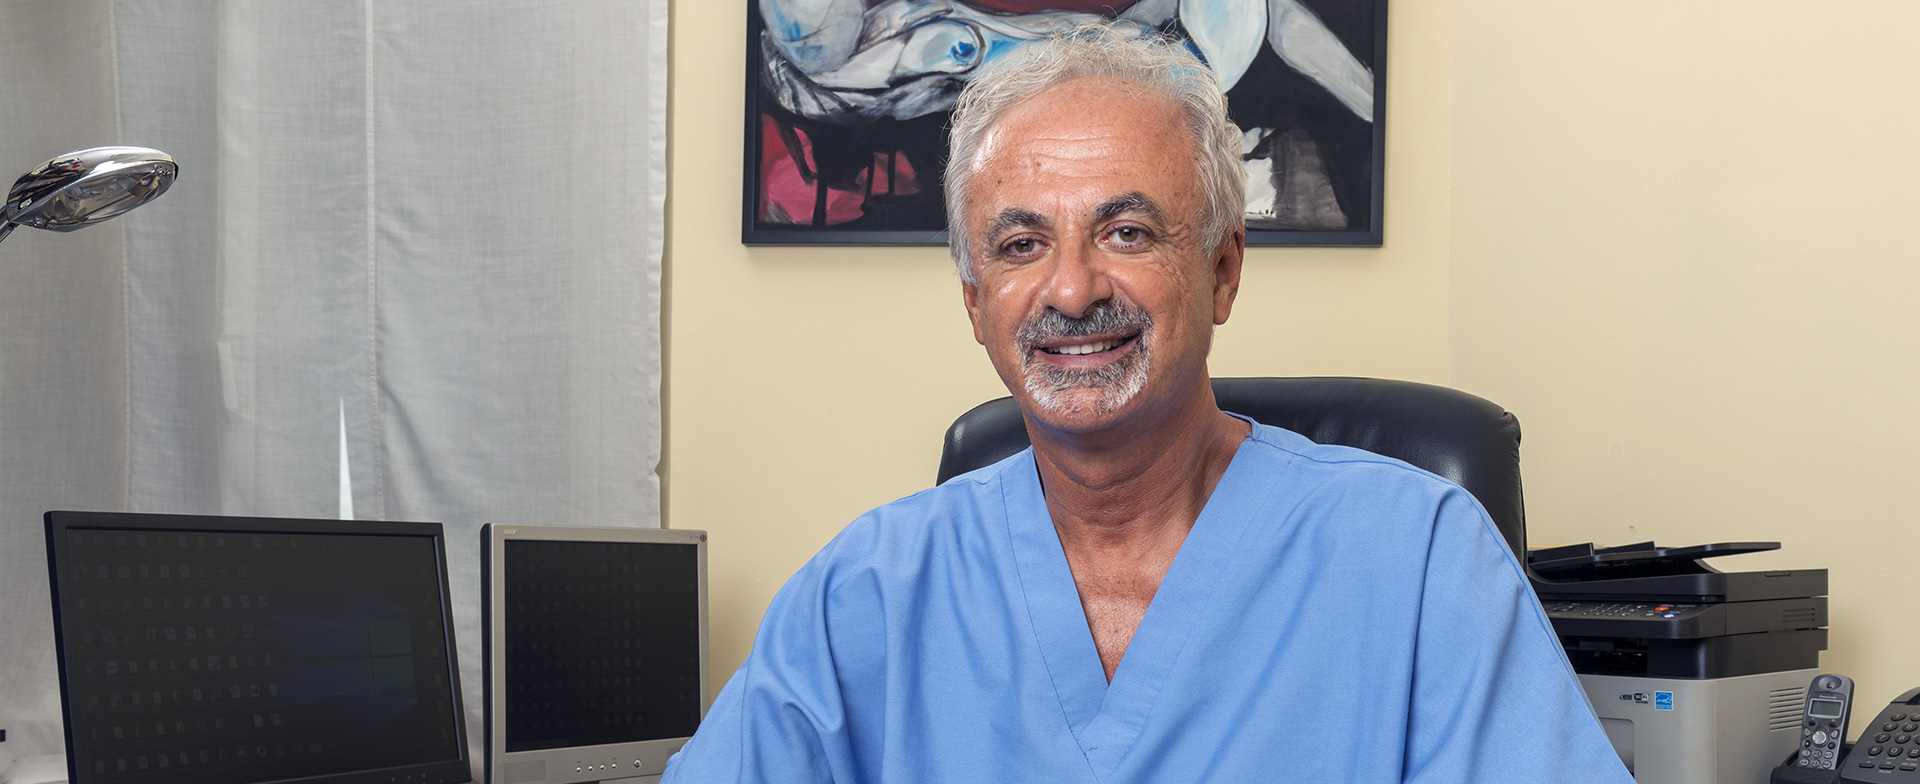 Studio Dentistico Dott. Luca Lancieri. Specialista in odontostomatologia, protesi dentale, implantologia e parodontologia, Genova